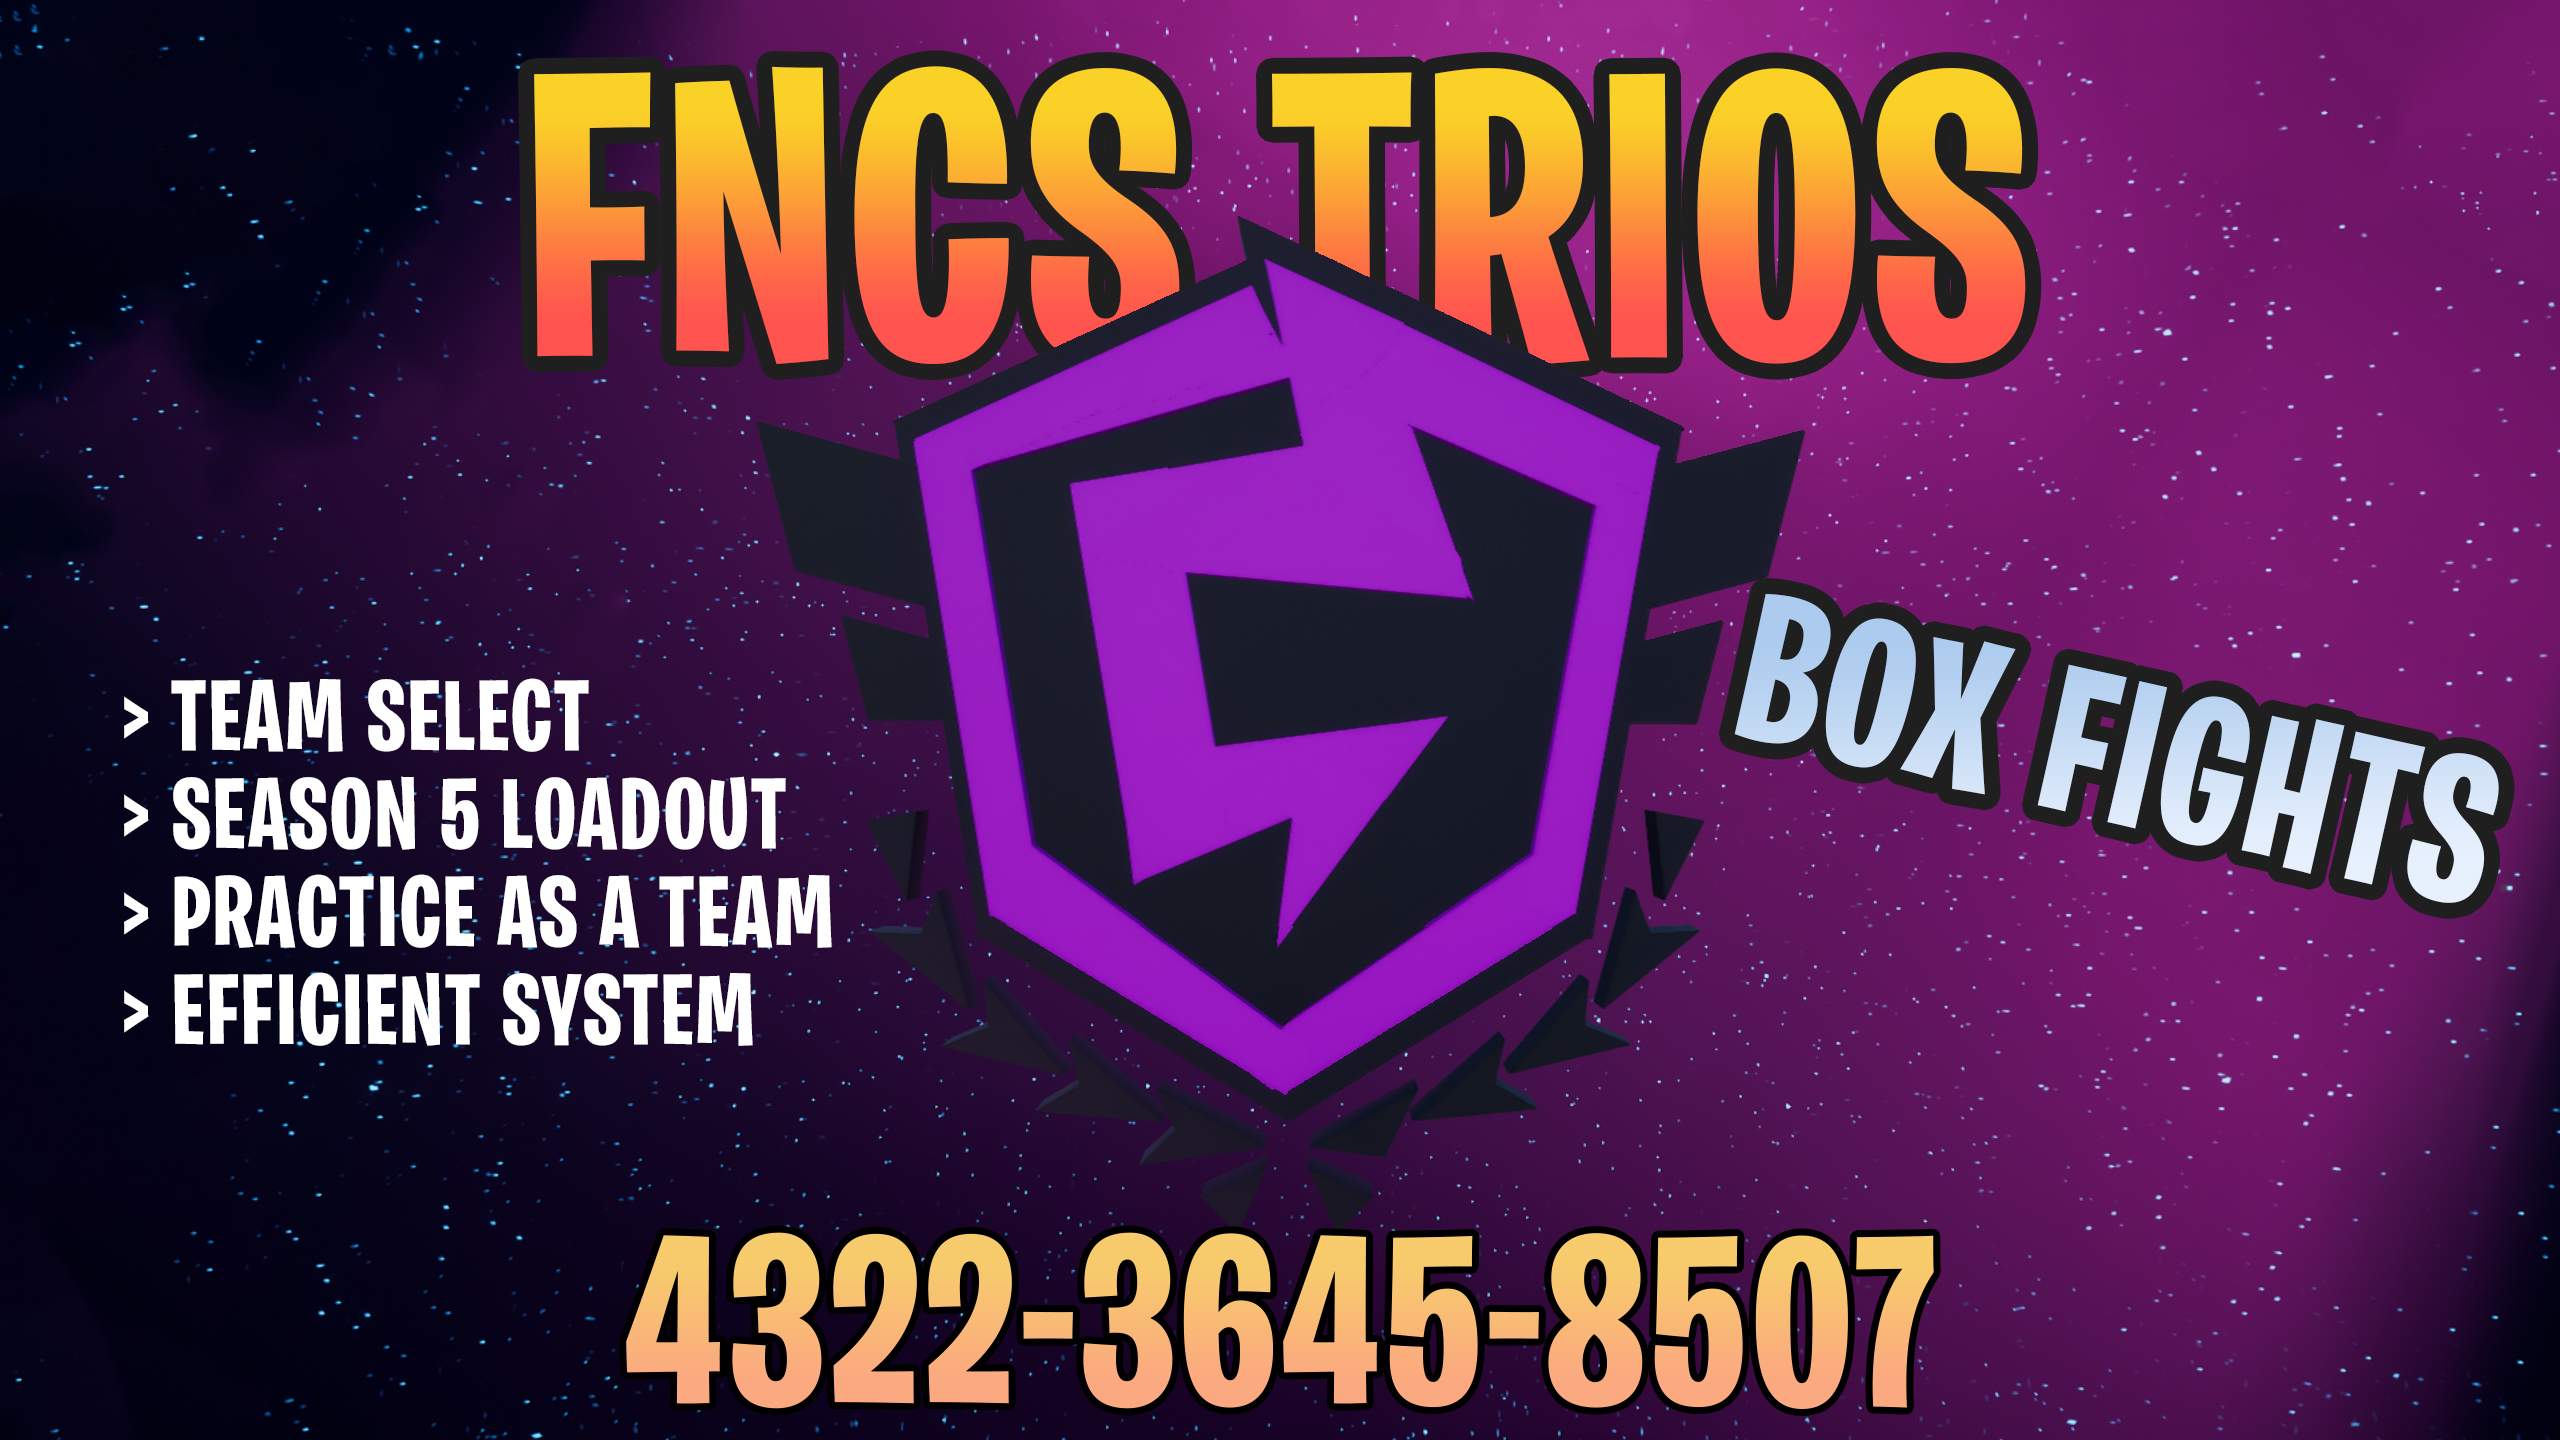 FNCS TRIOS BOX FIGHTS